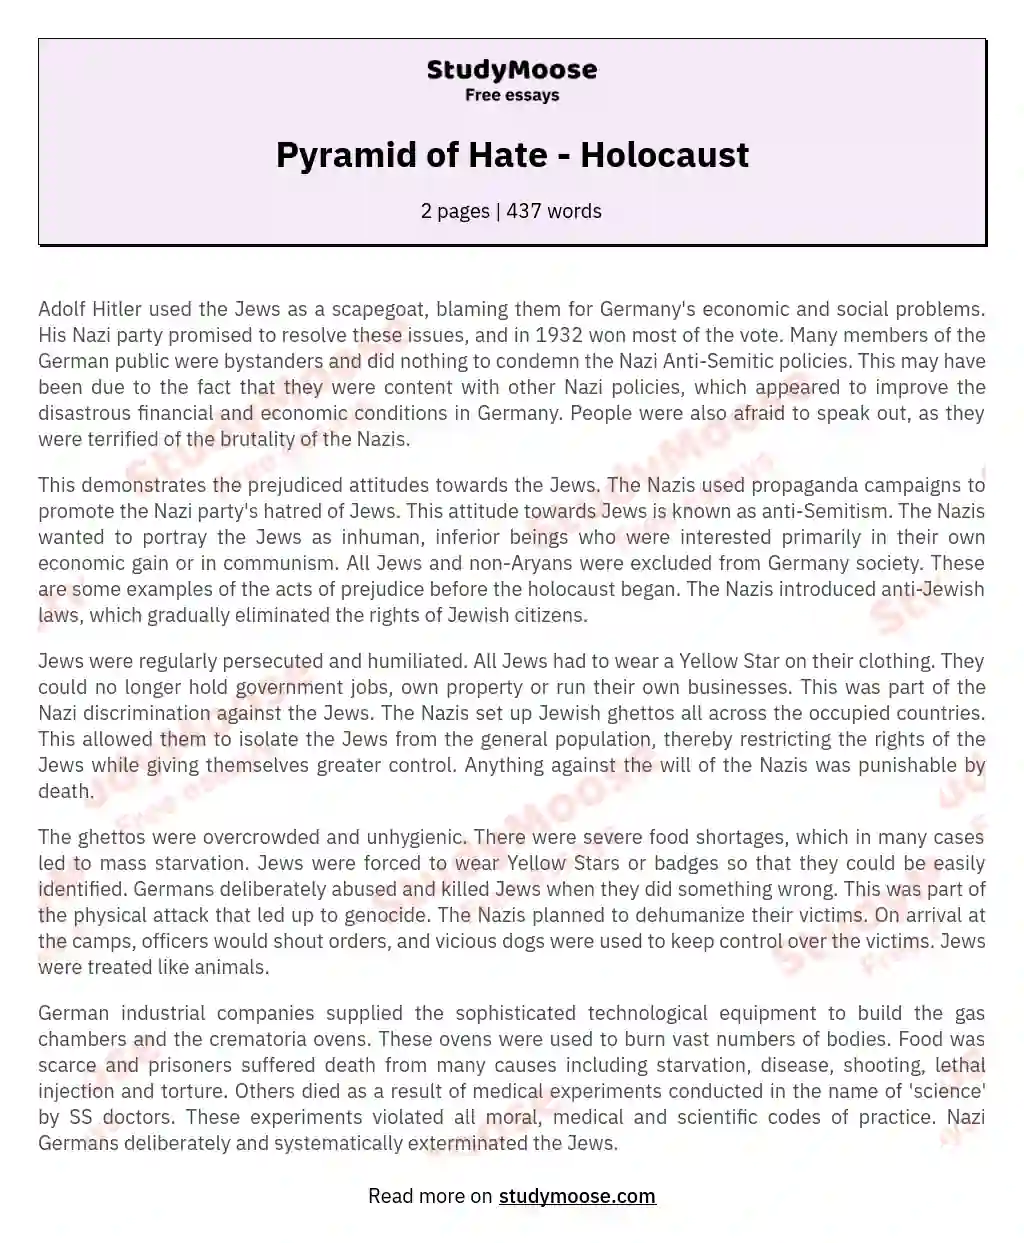 Pyramid of Hate - Holocaust